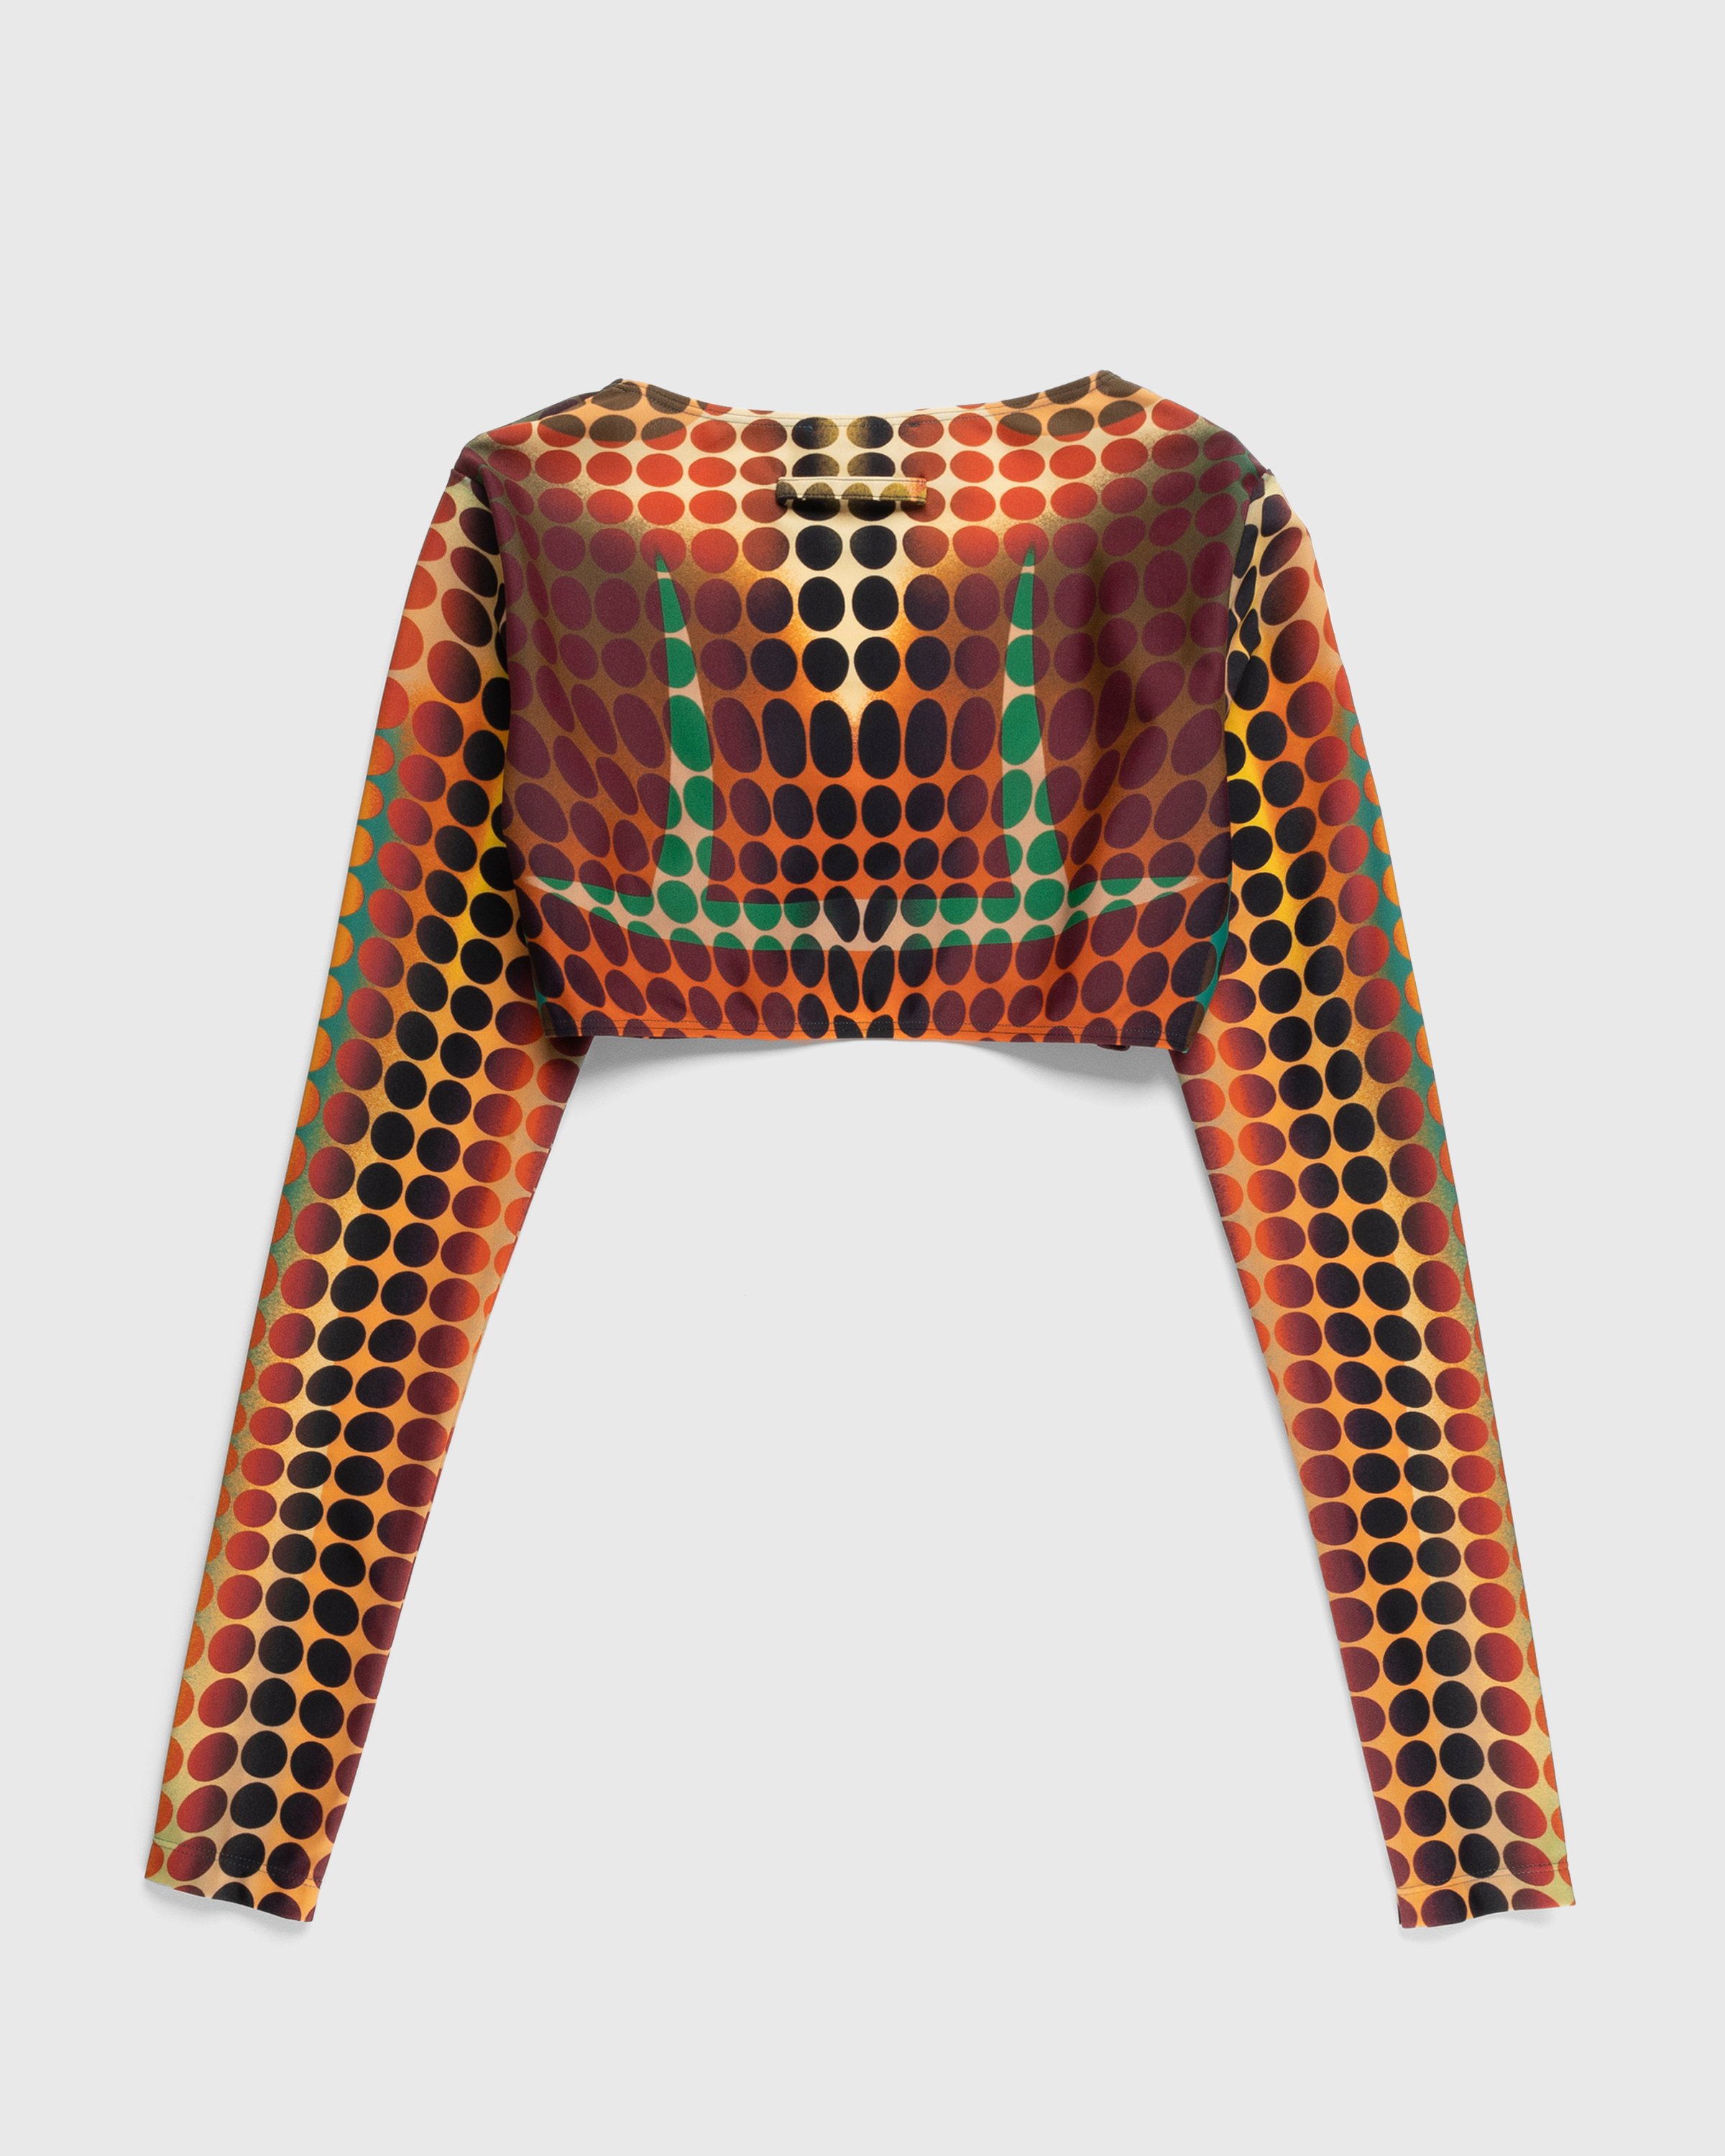 Jean Paul Gaultier - Cropped U Neck Longsleeve Top - Clothing - Orange - Image 2